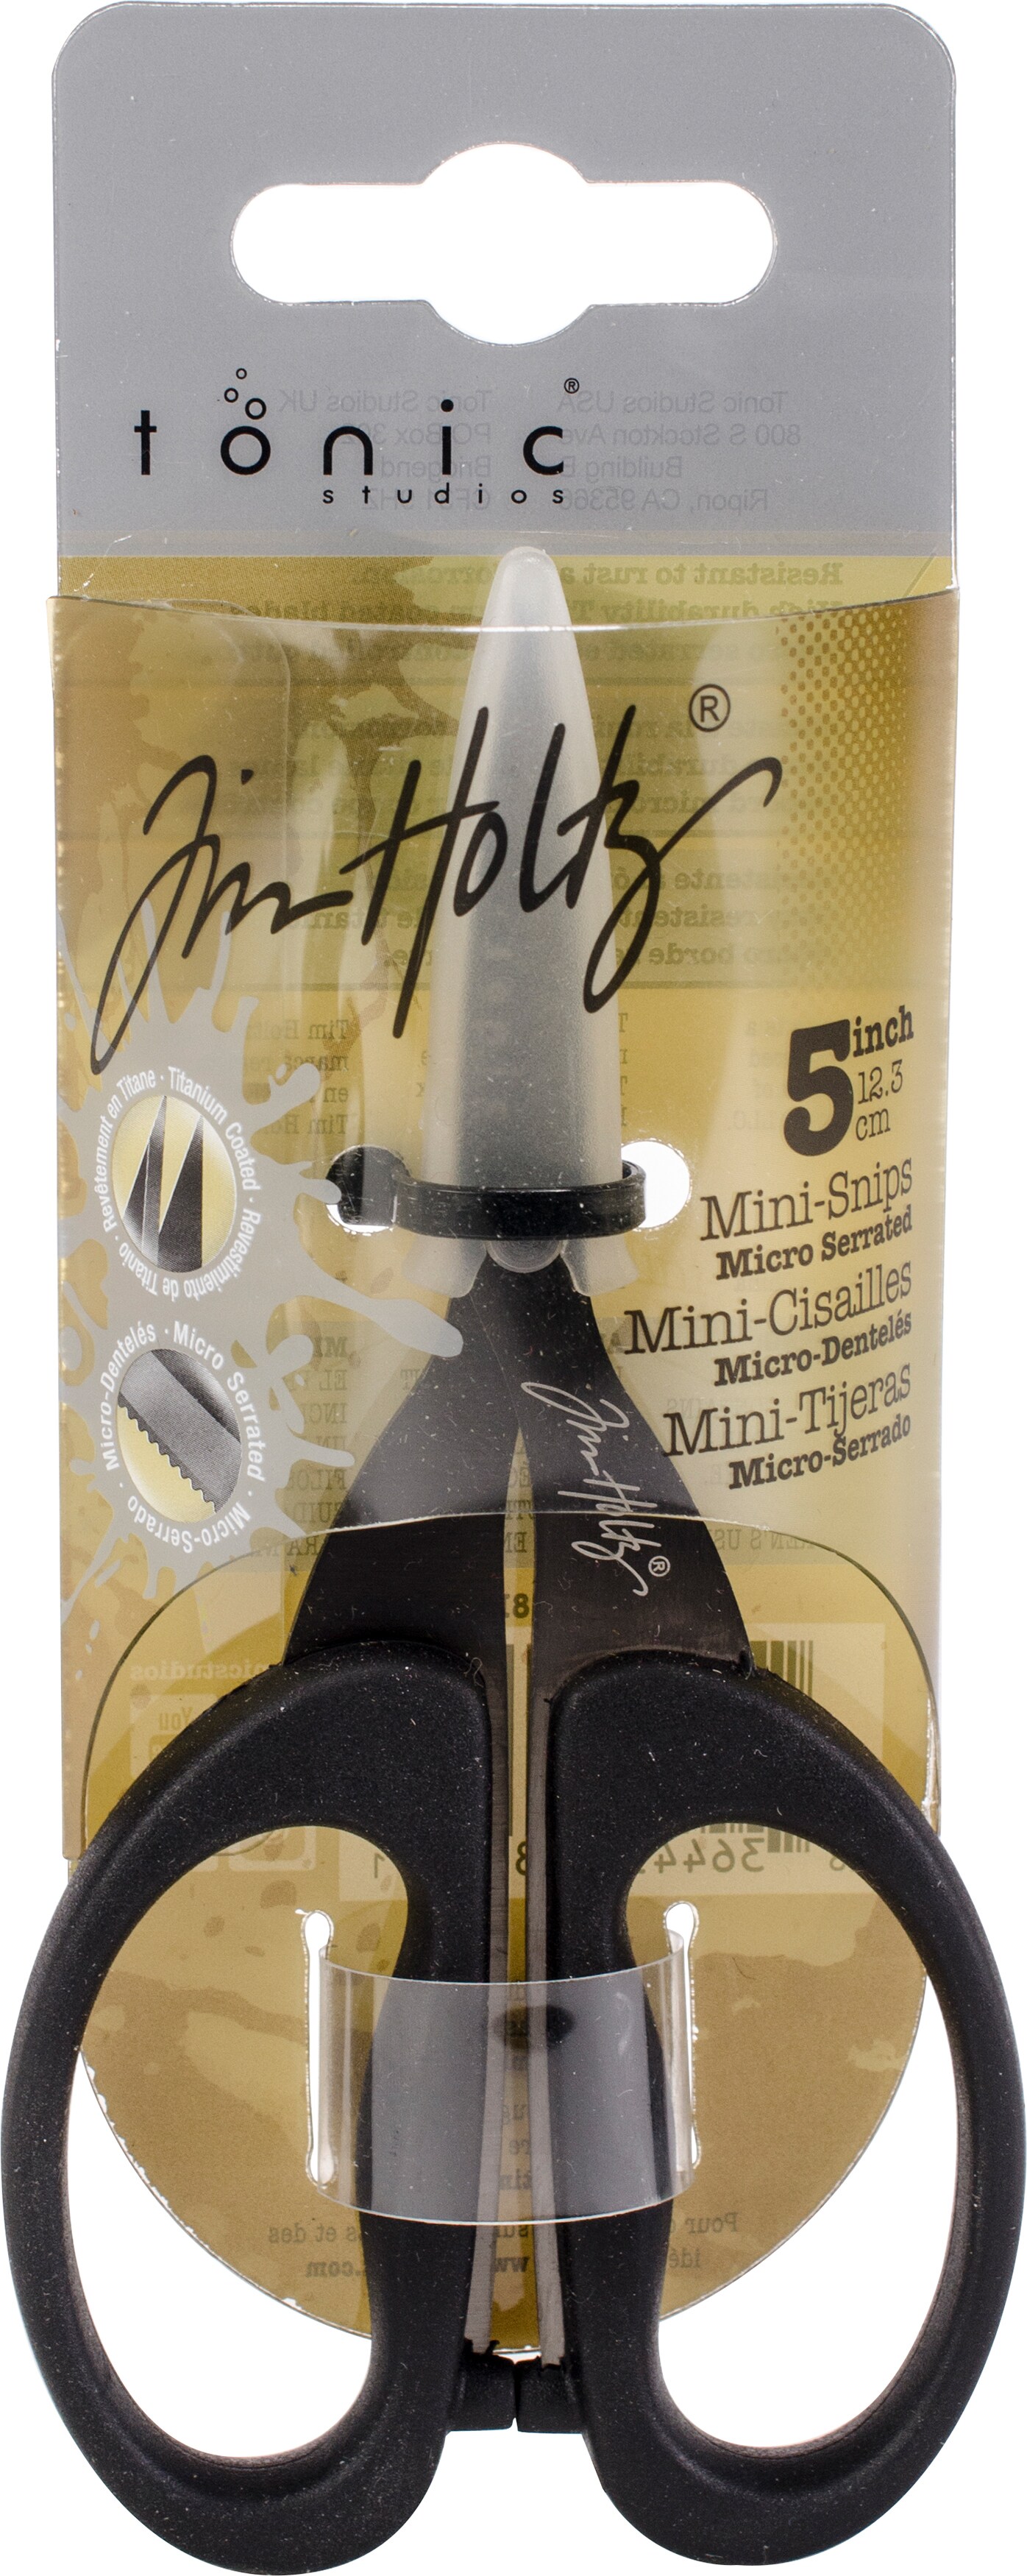 Tim Holtz Small Scissors - 5 Inch Mini Snips with Micro Serrated